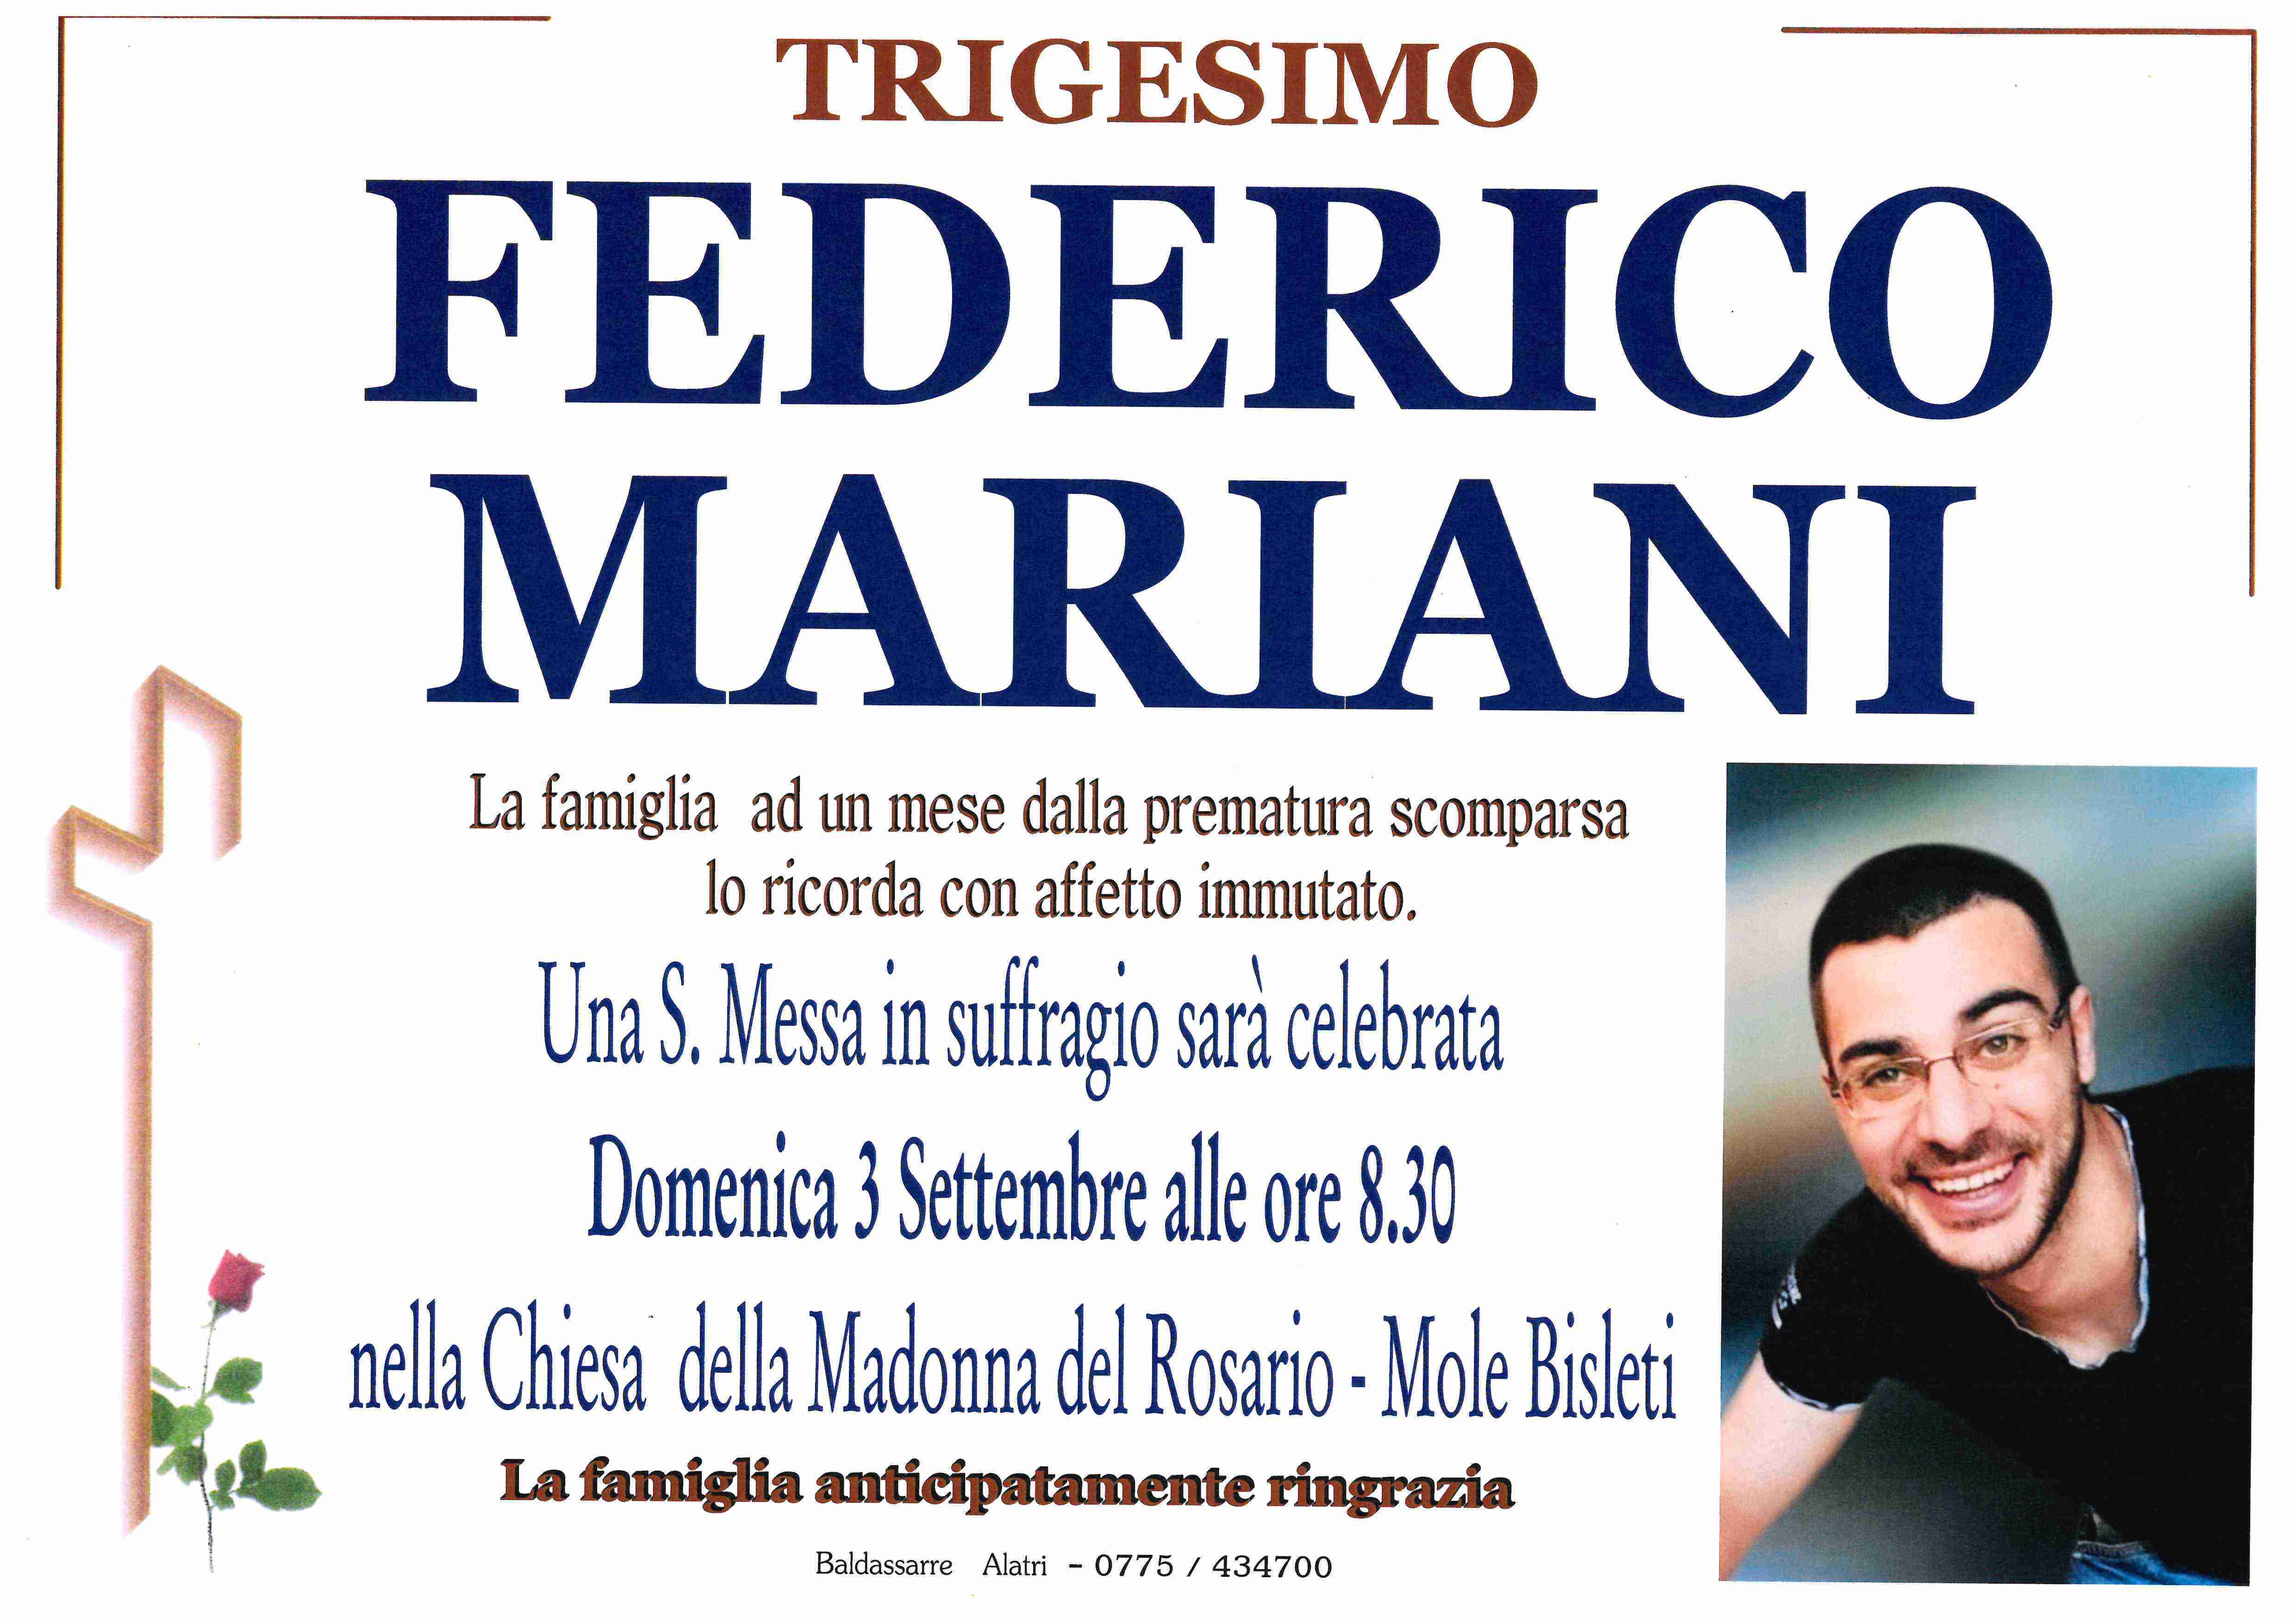 Federico Mariani